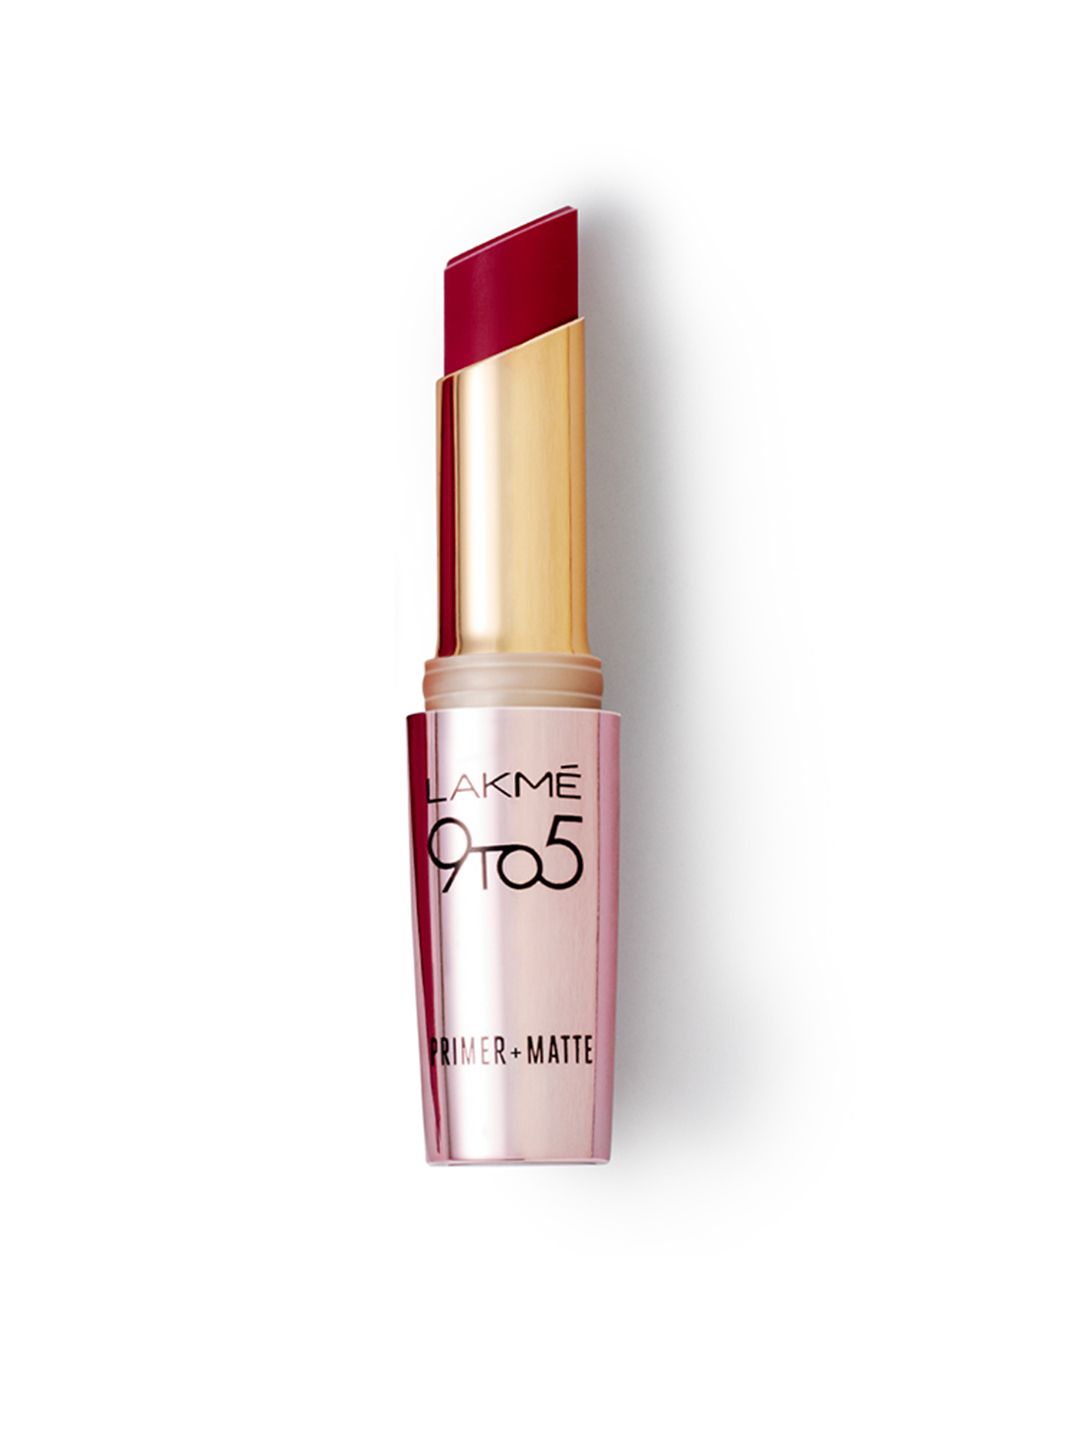 Lakme 9 to 5 Primer + Matte Lipstick-Burgundy Passion MR13 Price in India